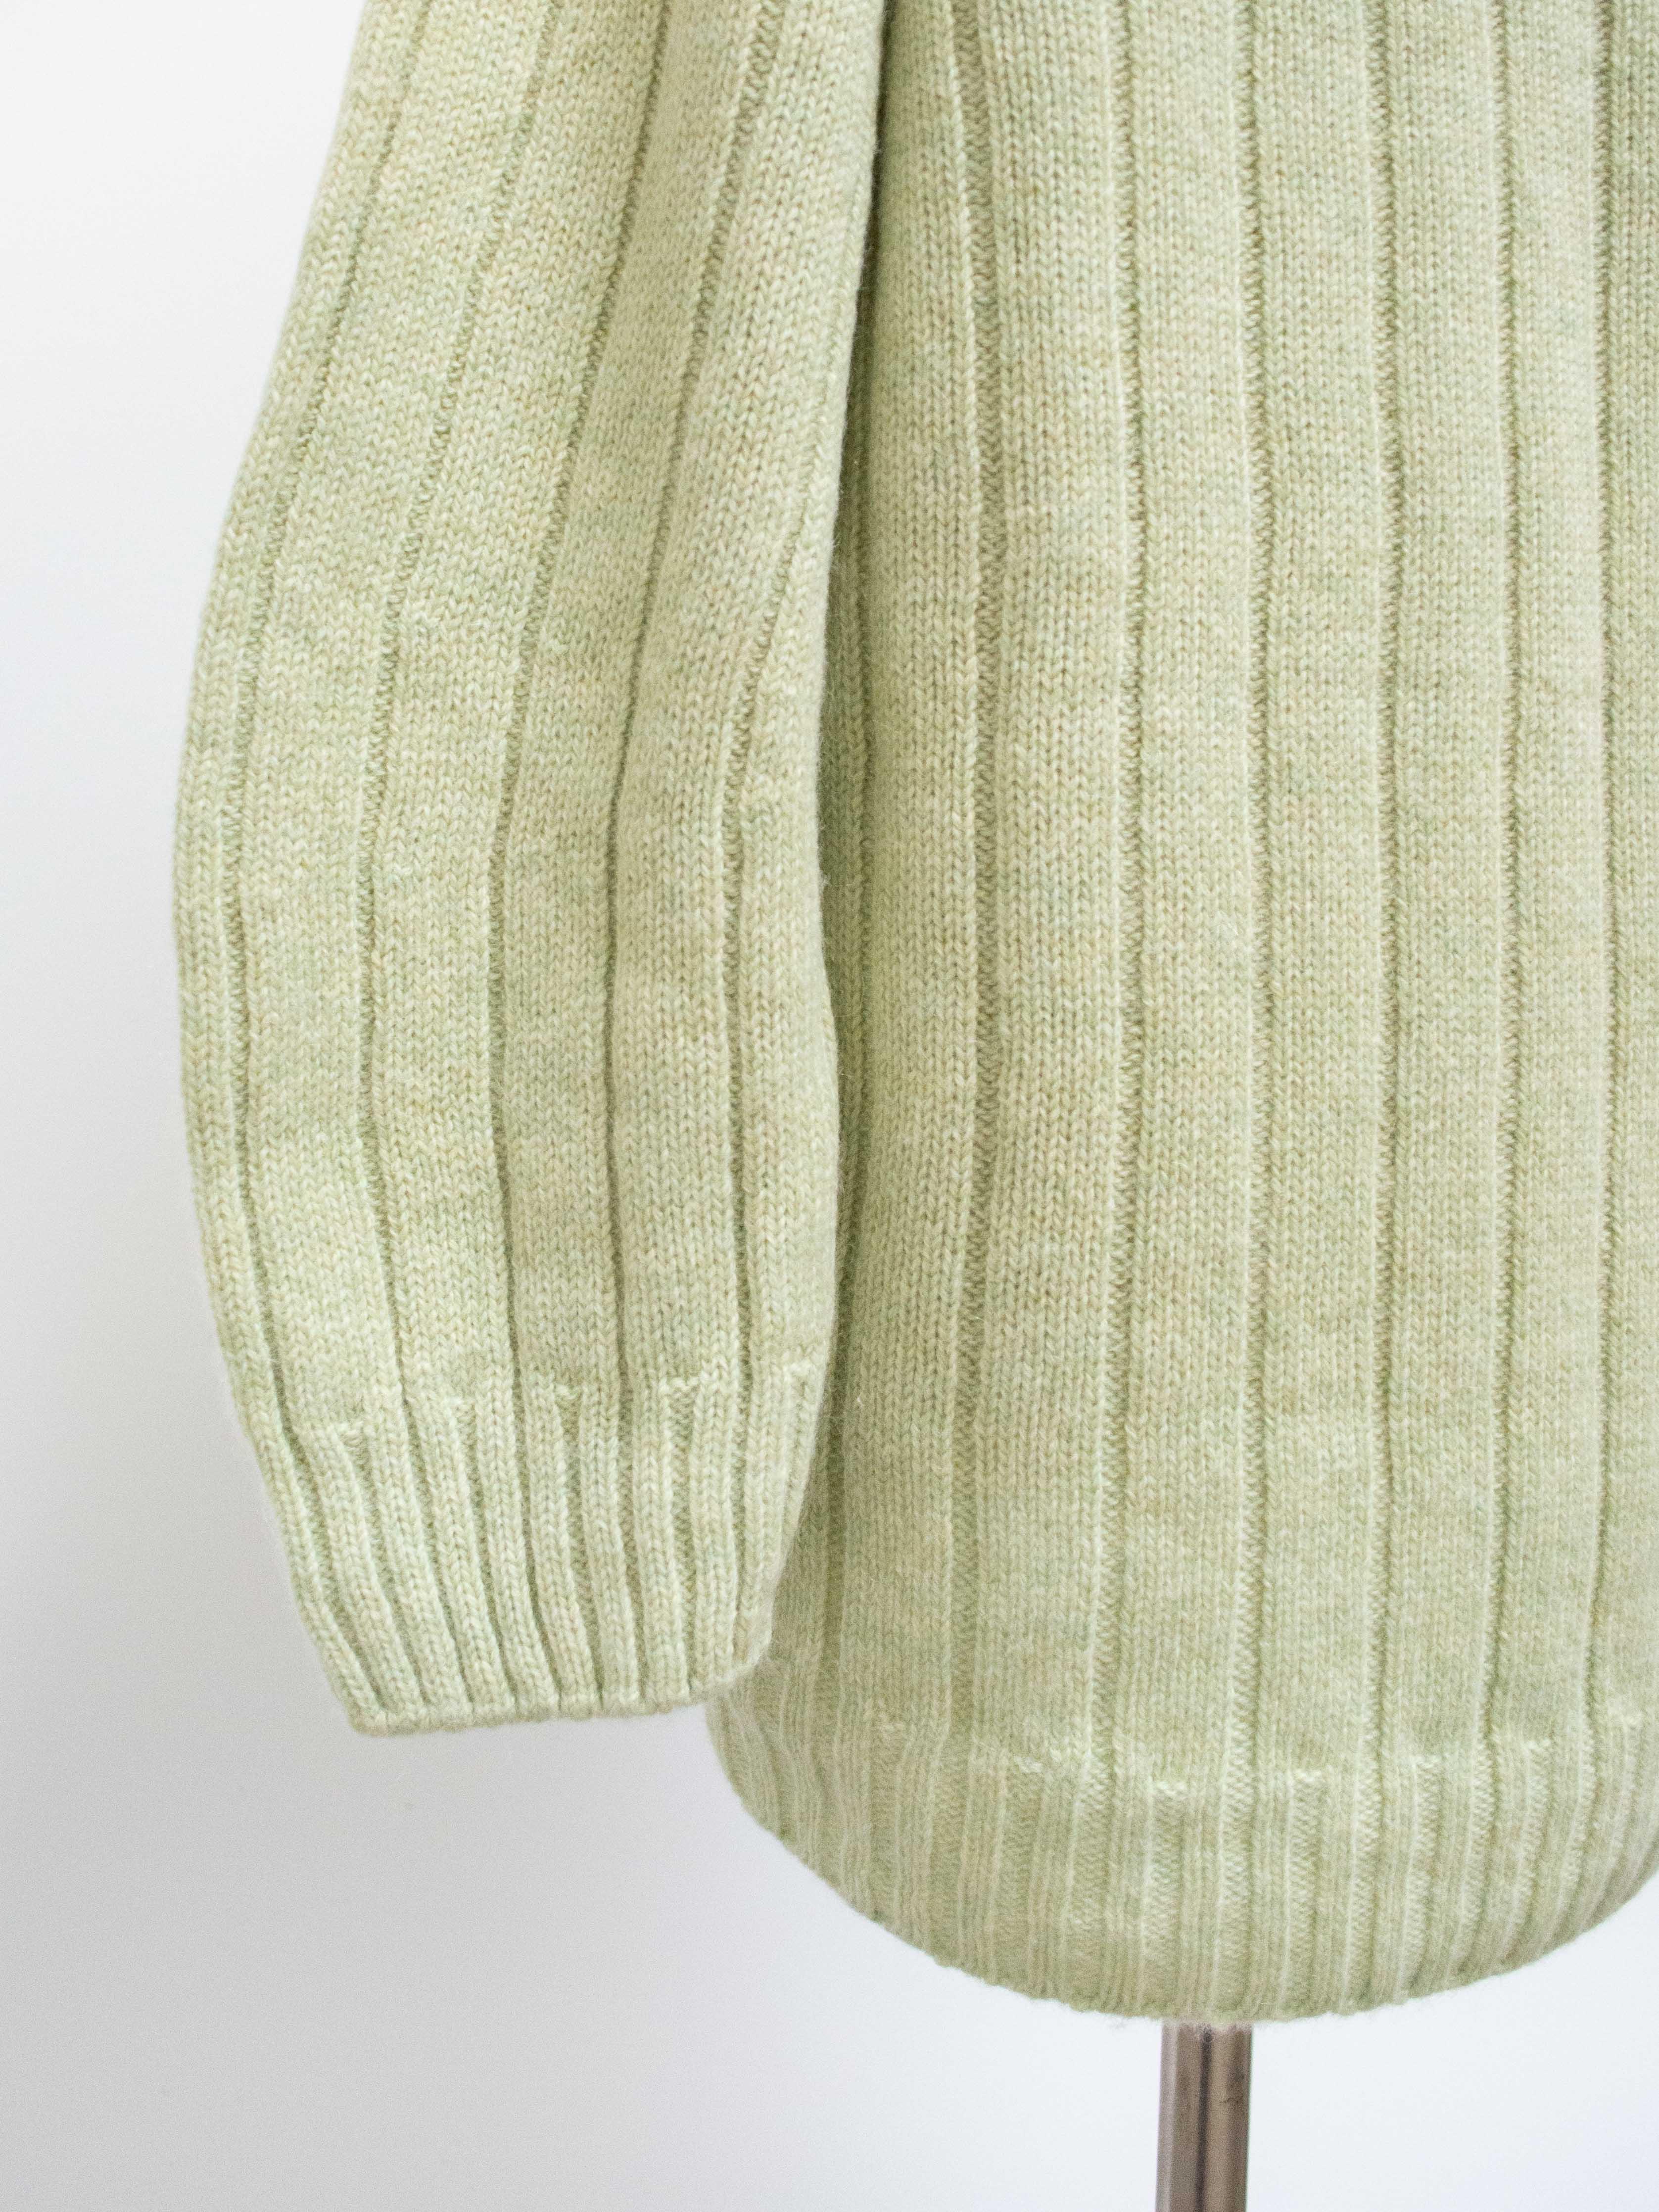 Namu Shop - Unfil Royal Baby Alpaca Chunky Turtleneck Sweater - Light Green